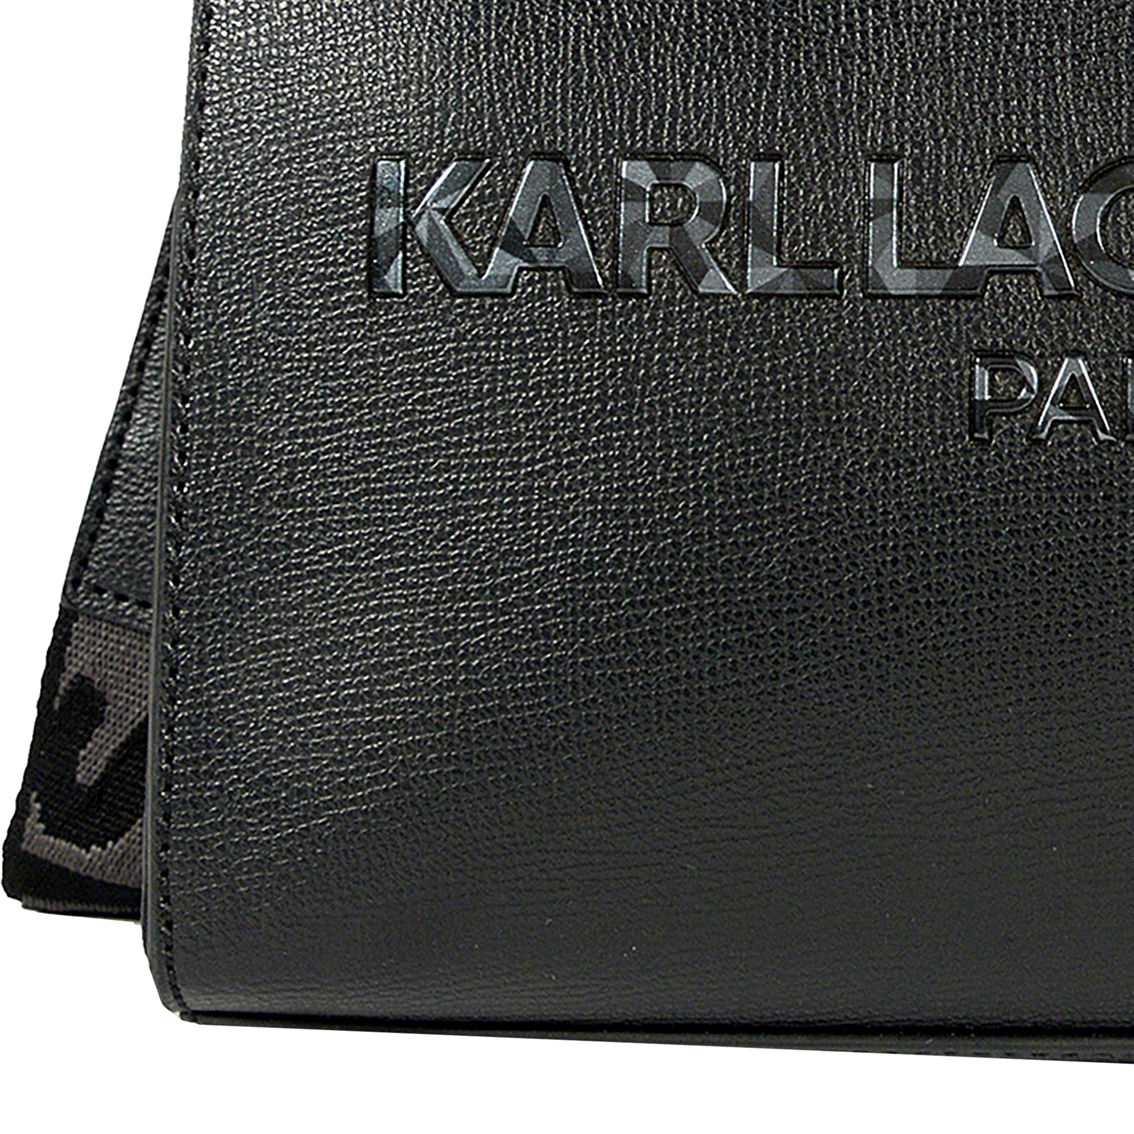 Karl Lagerfeld Maybelle Satchel - Image 4 of 4